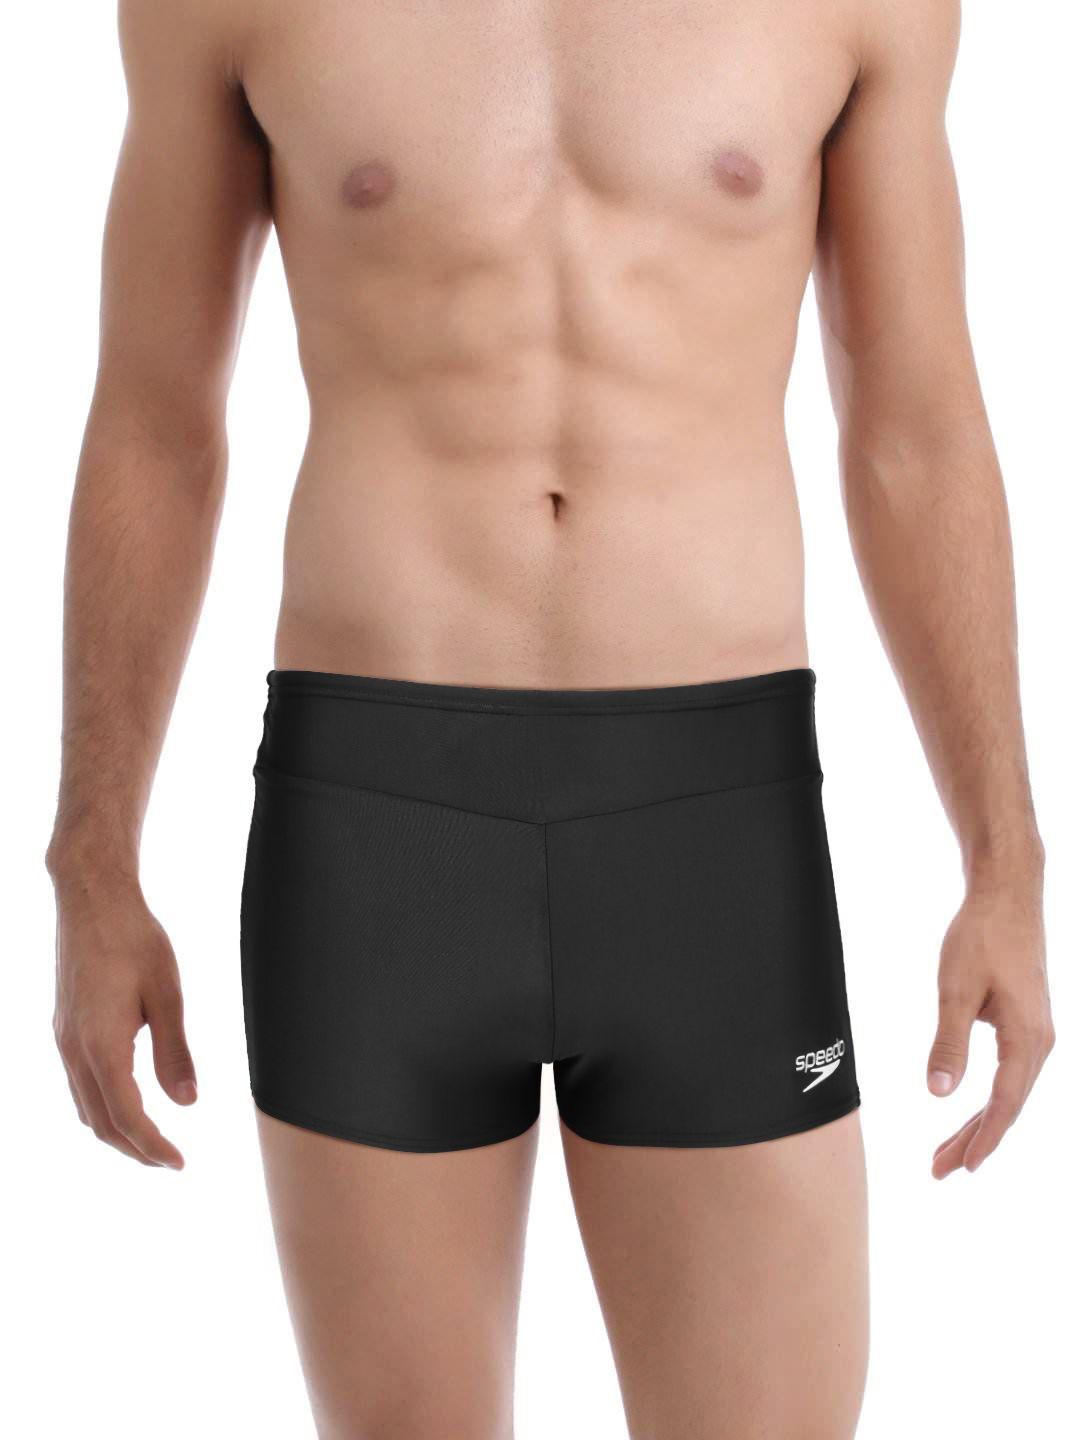 speedo men black essential swimming trunks